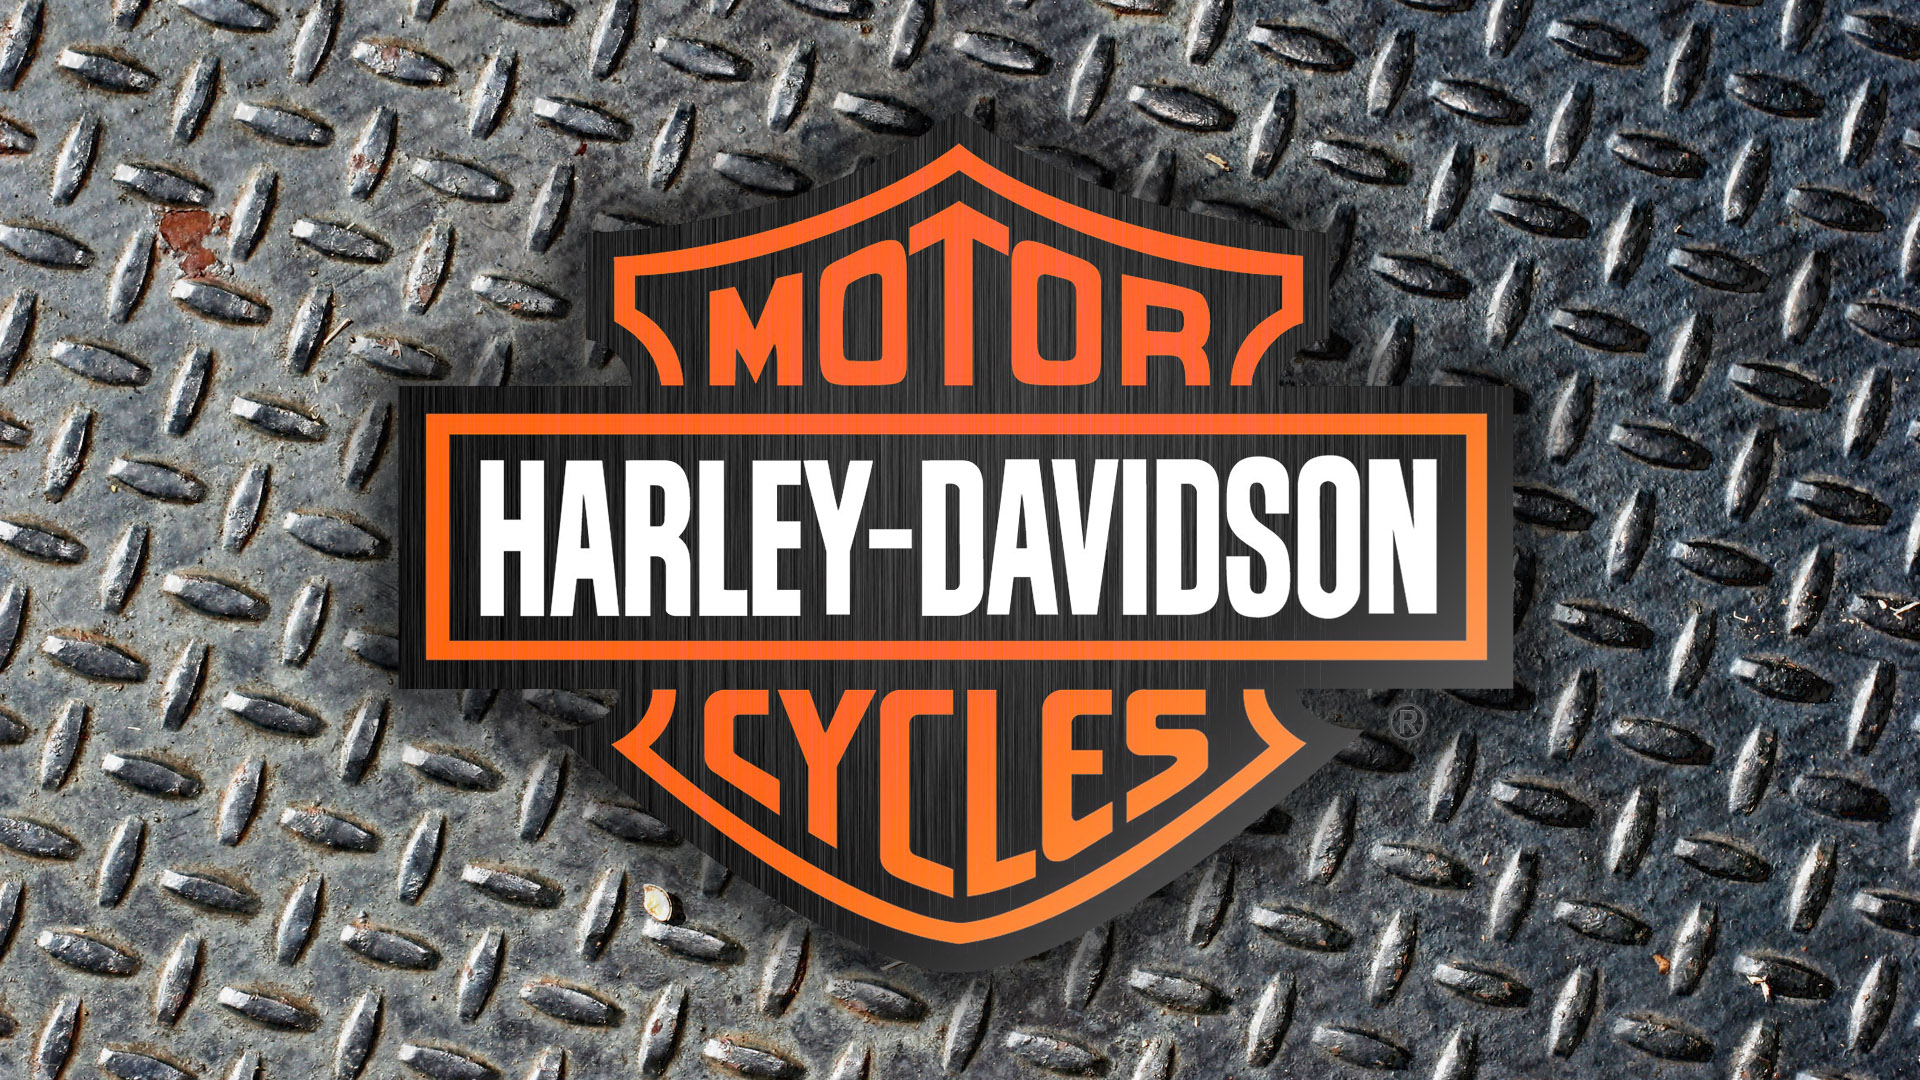 Ultrawide Wallpapers Motorcycles logo, harley davidson logo, vehicles, harley davidson